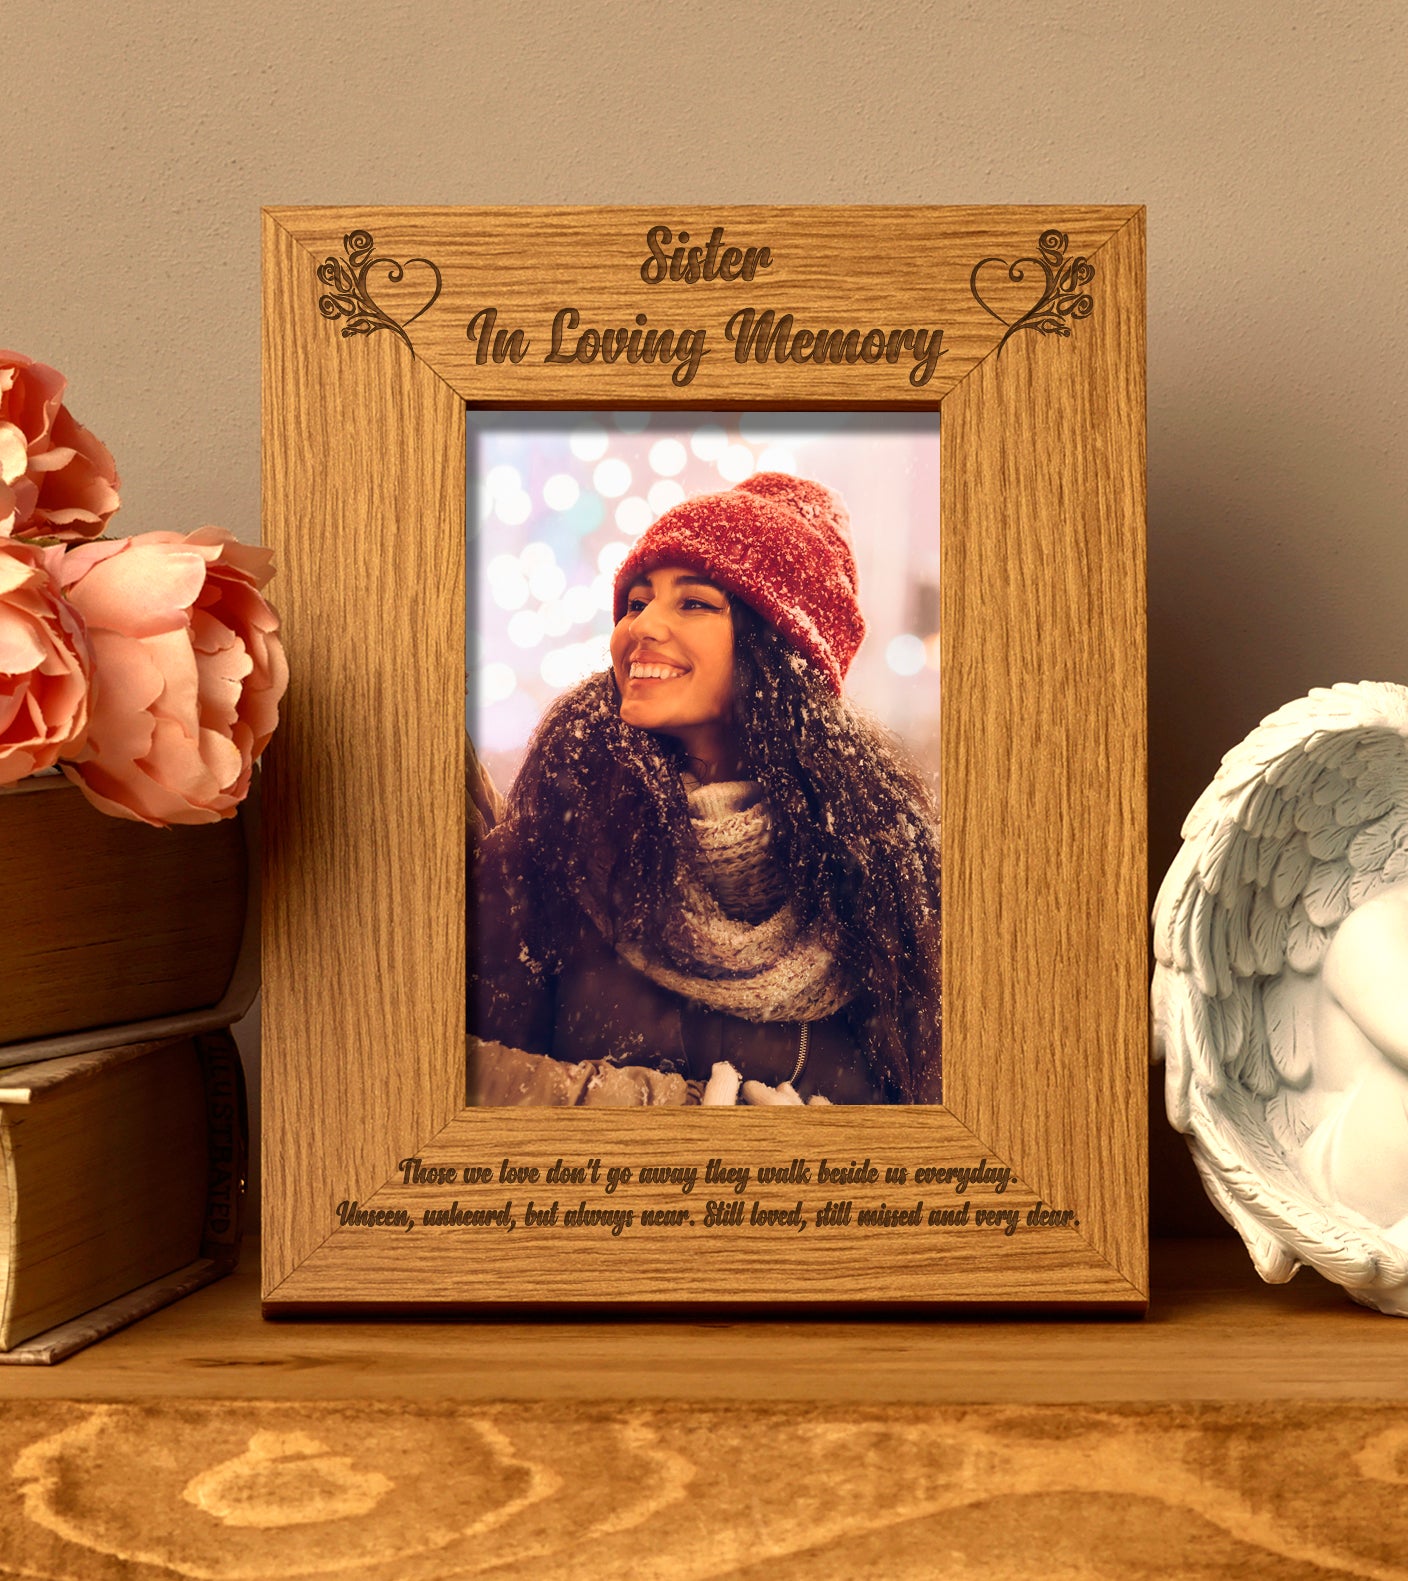 Sister In Loving Memory Remembrance Portrait Wooden Photo Frame Gift - ukgiftstoreonline